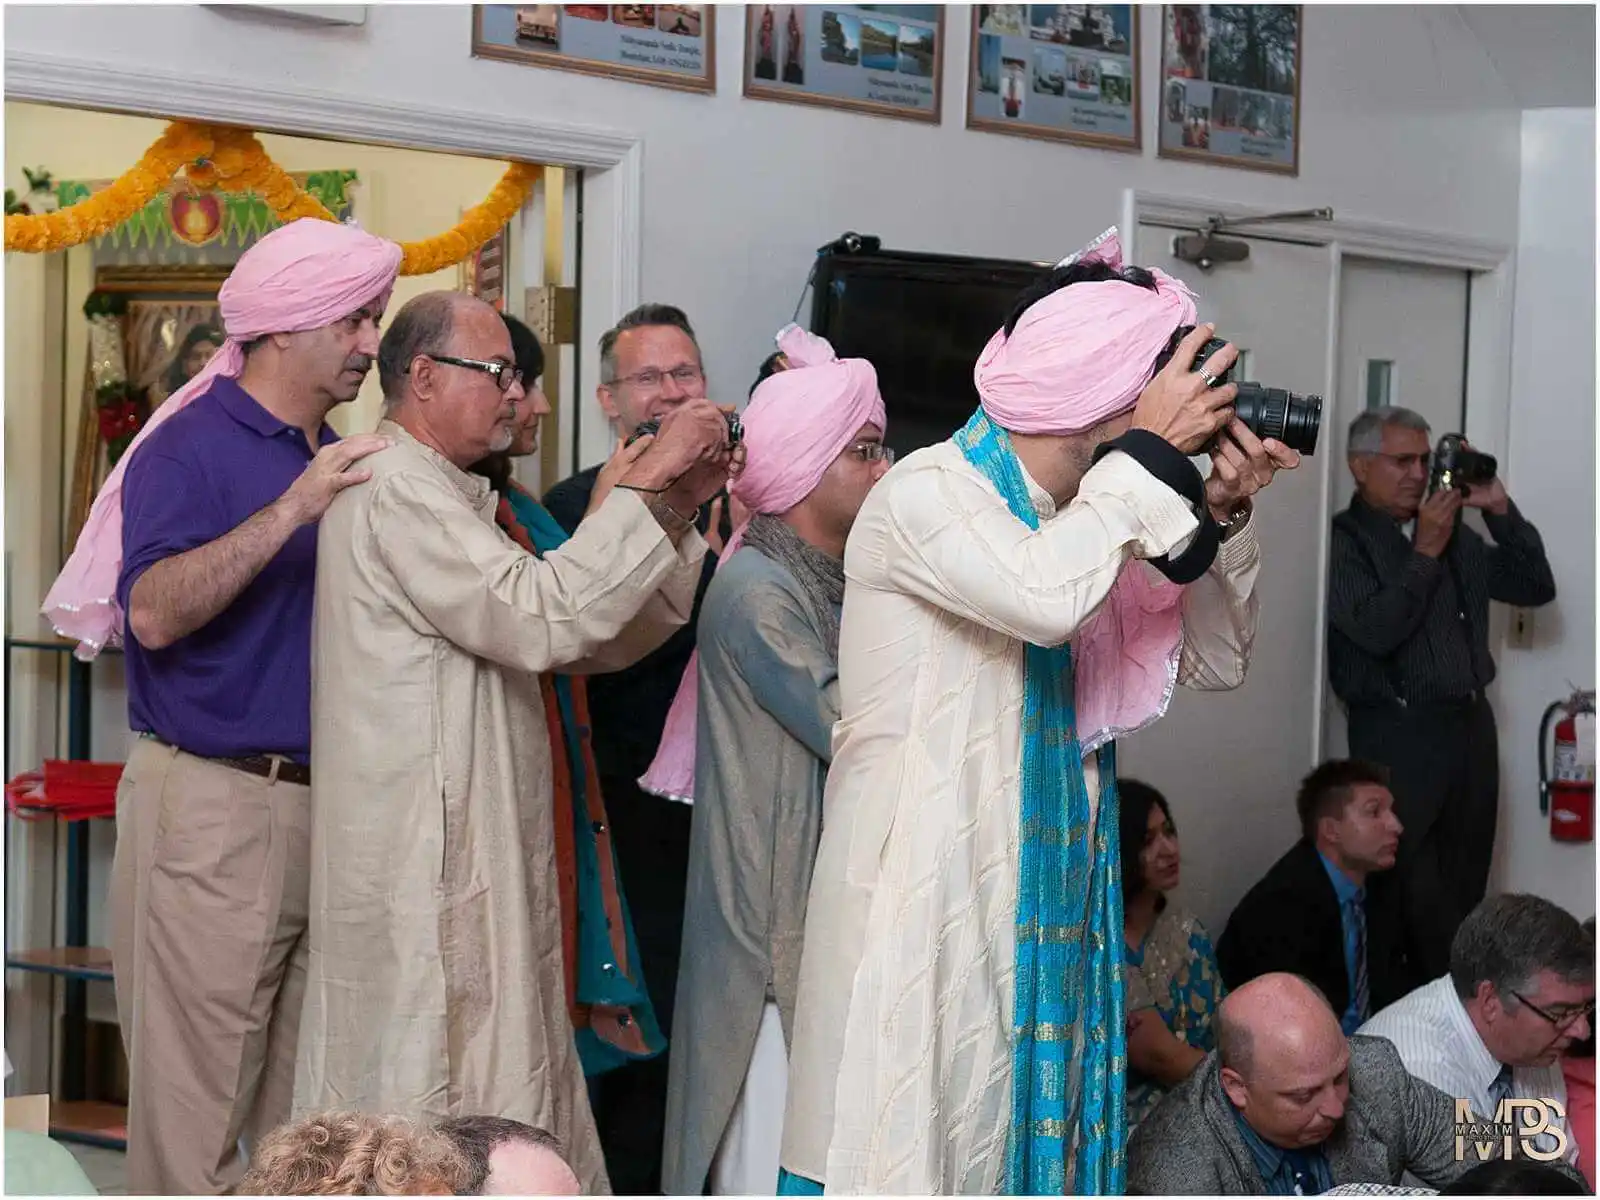 Columbus Ohio Indian wedding Ceremony, Columbus Wedding Photographers getting stuck behind guests